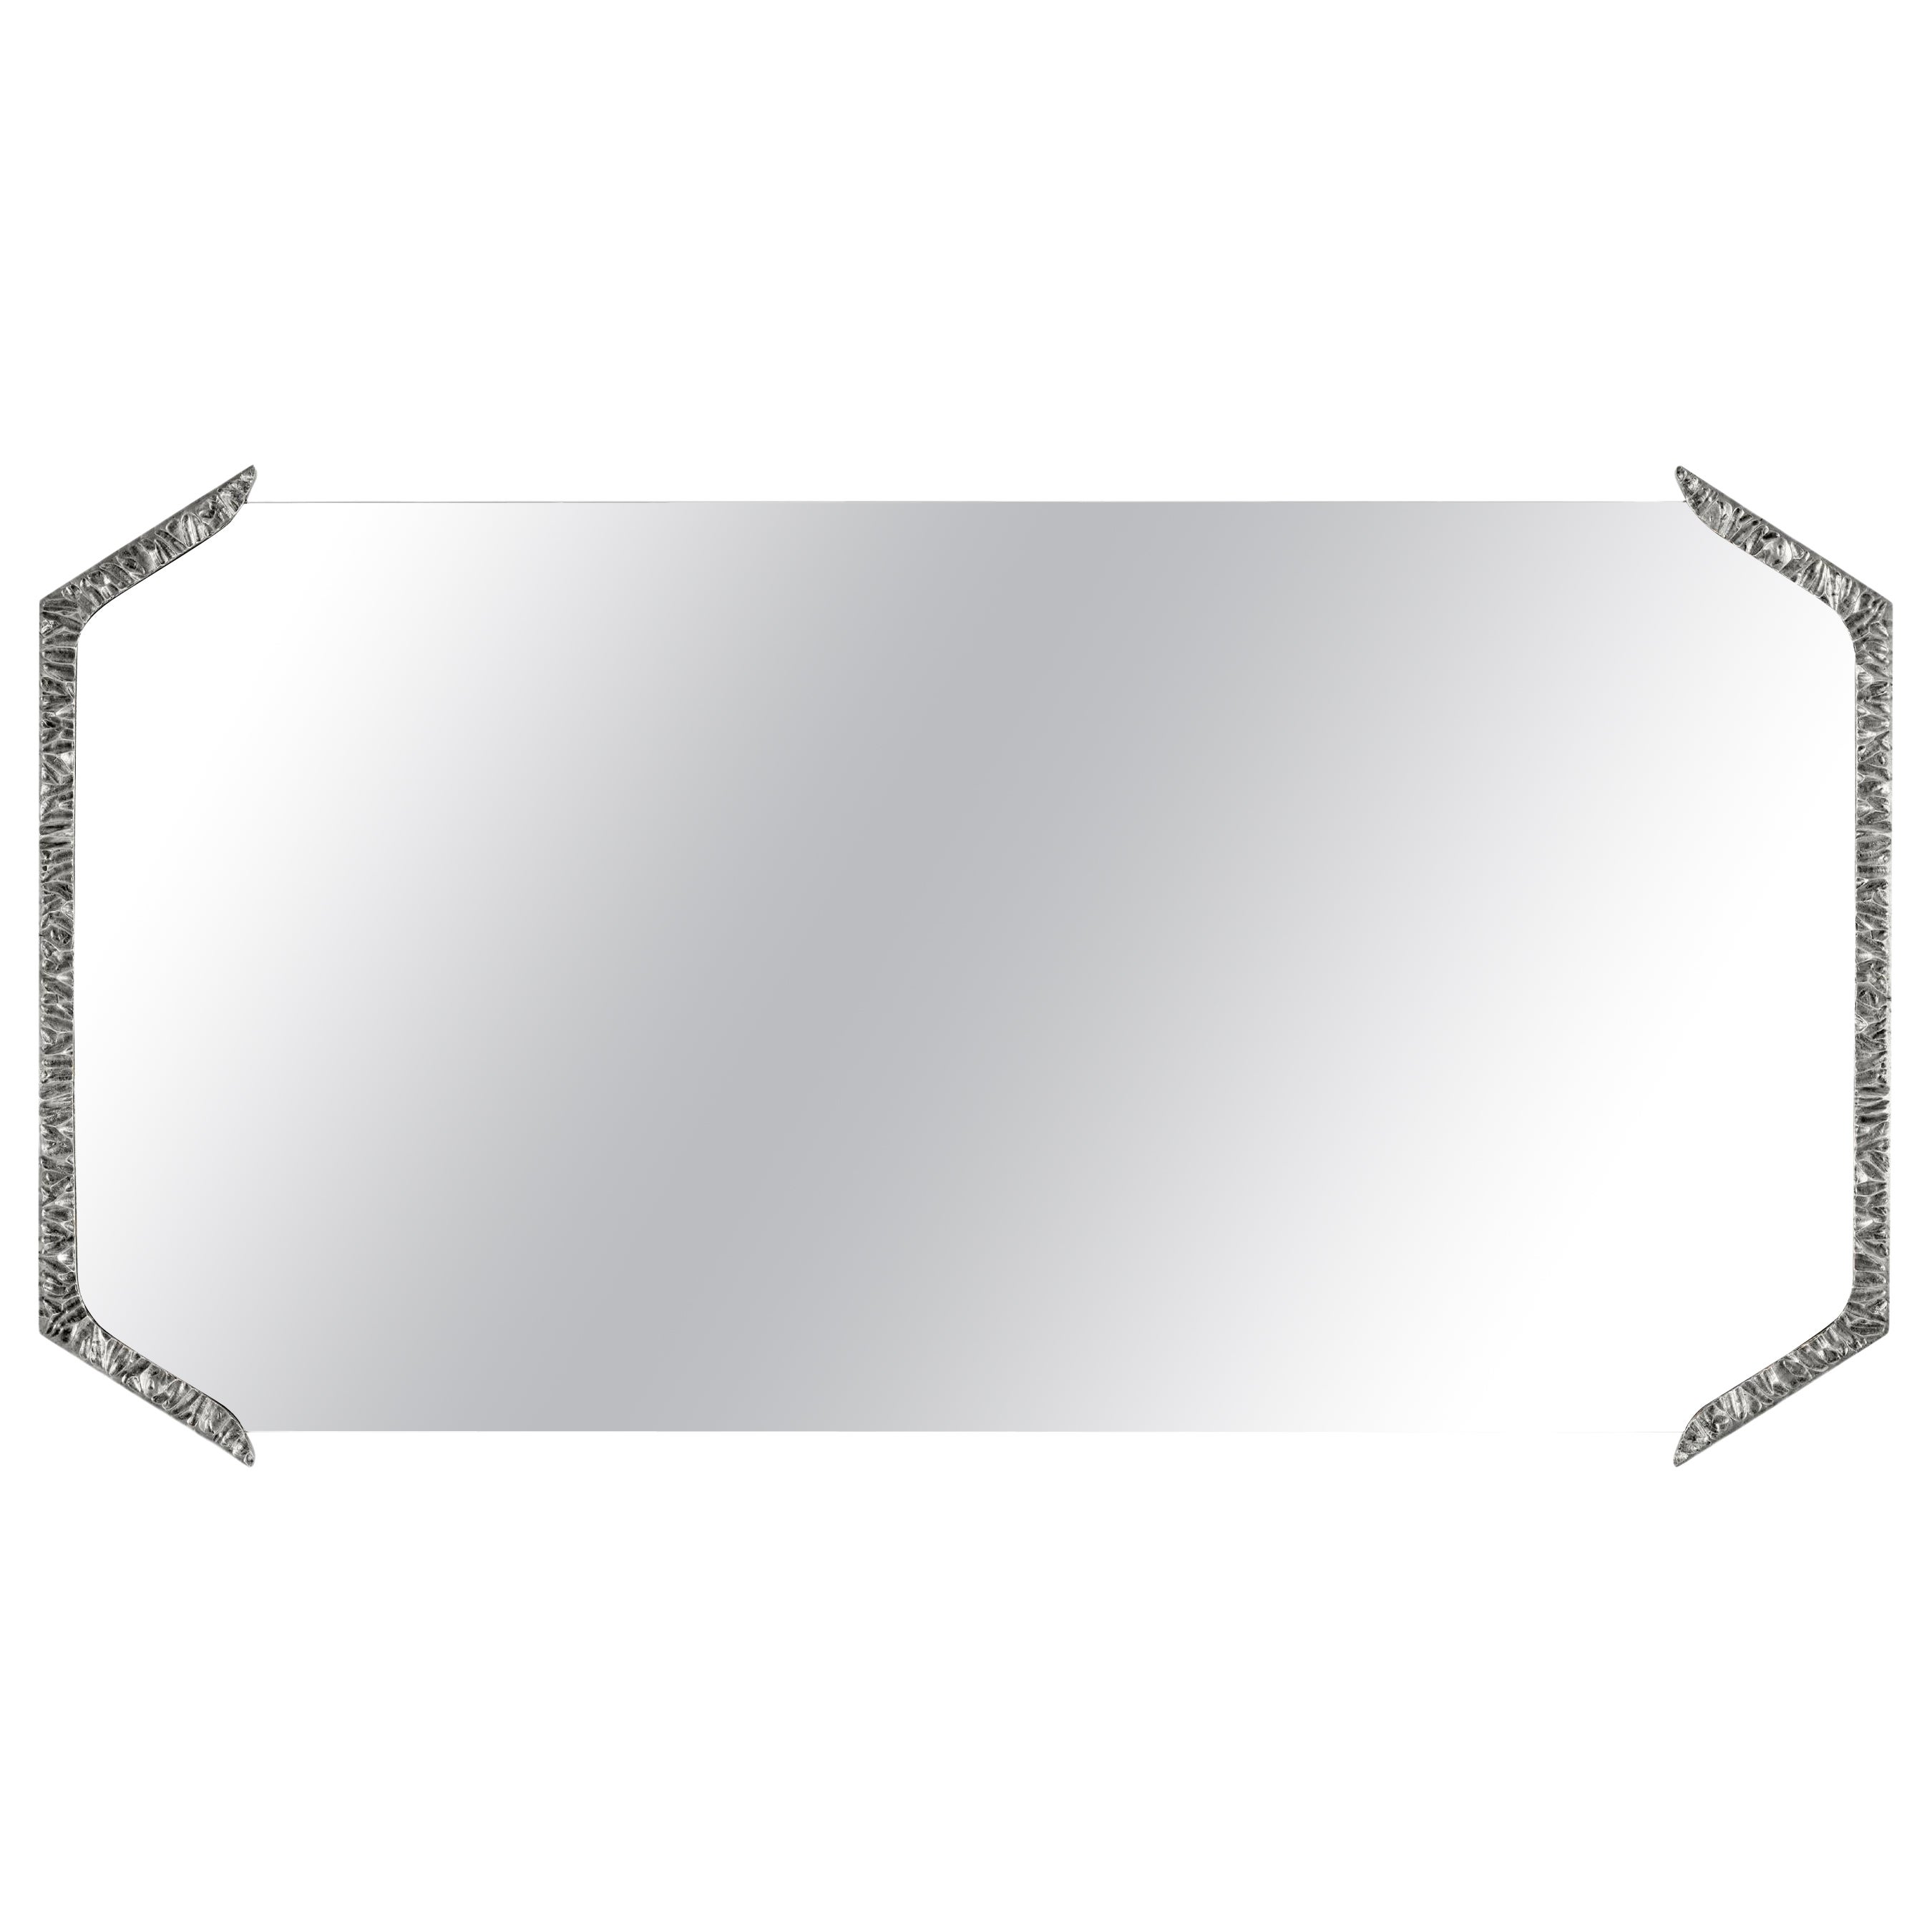 Alentejo Rectangular Mirror, Nickel, InsidherLand by Joana Santos Barbosa For Sale